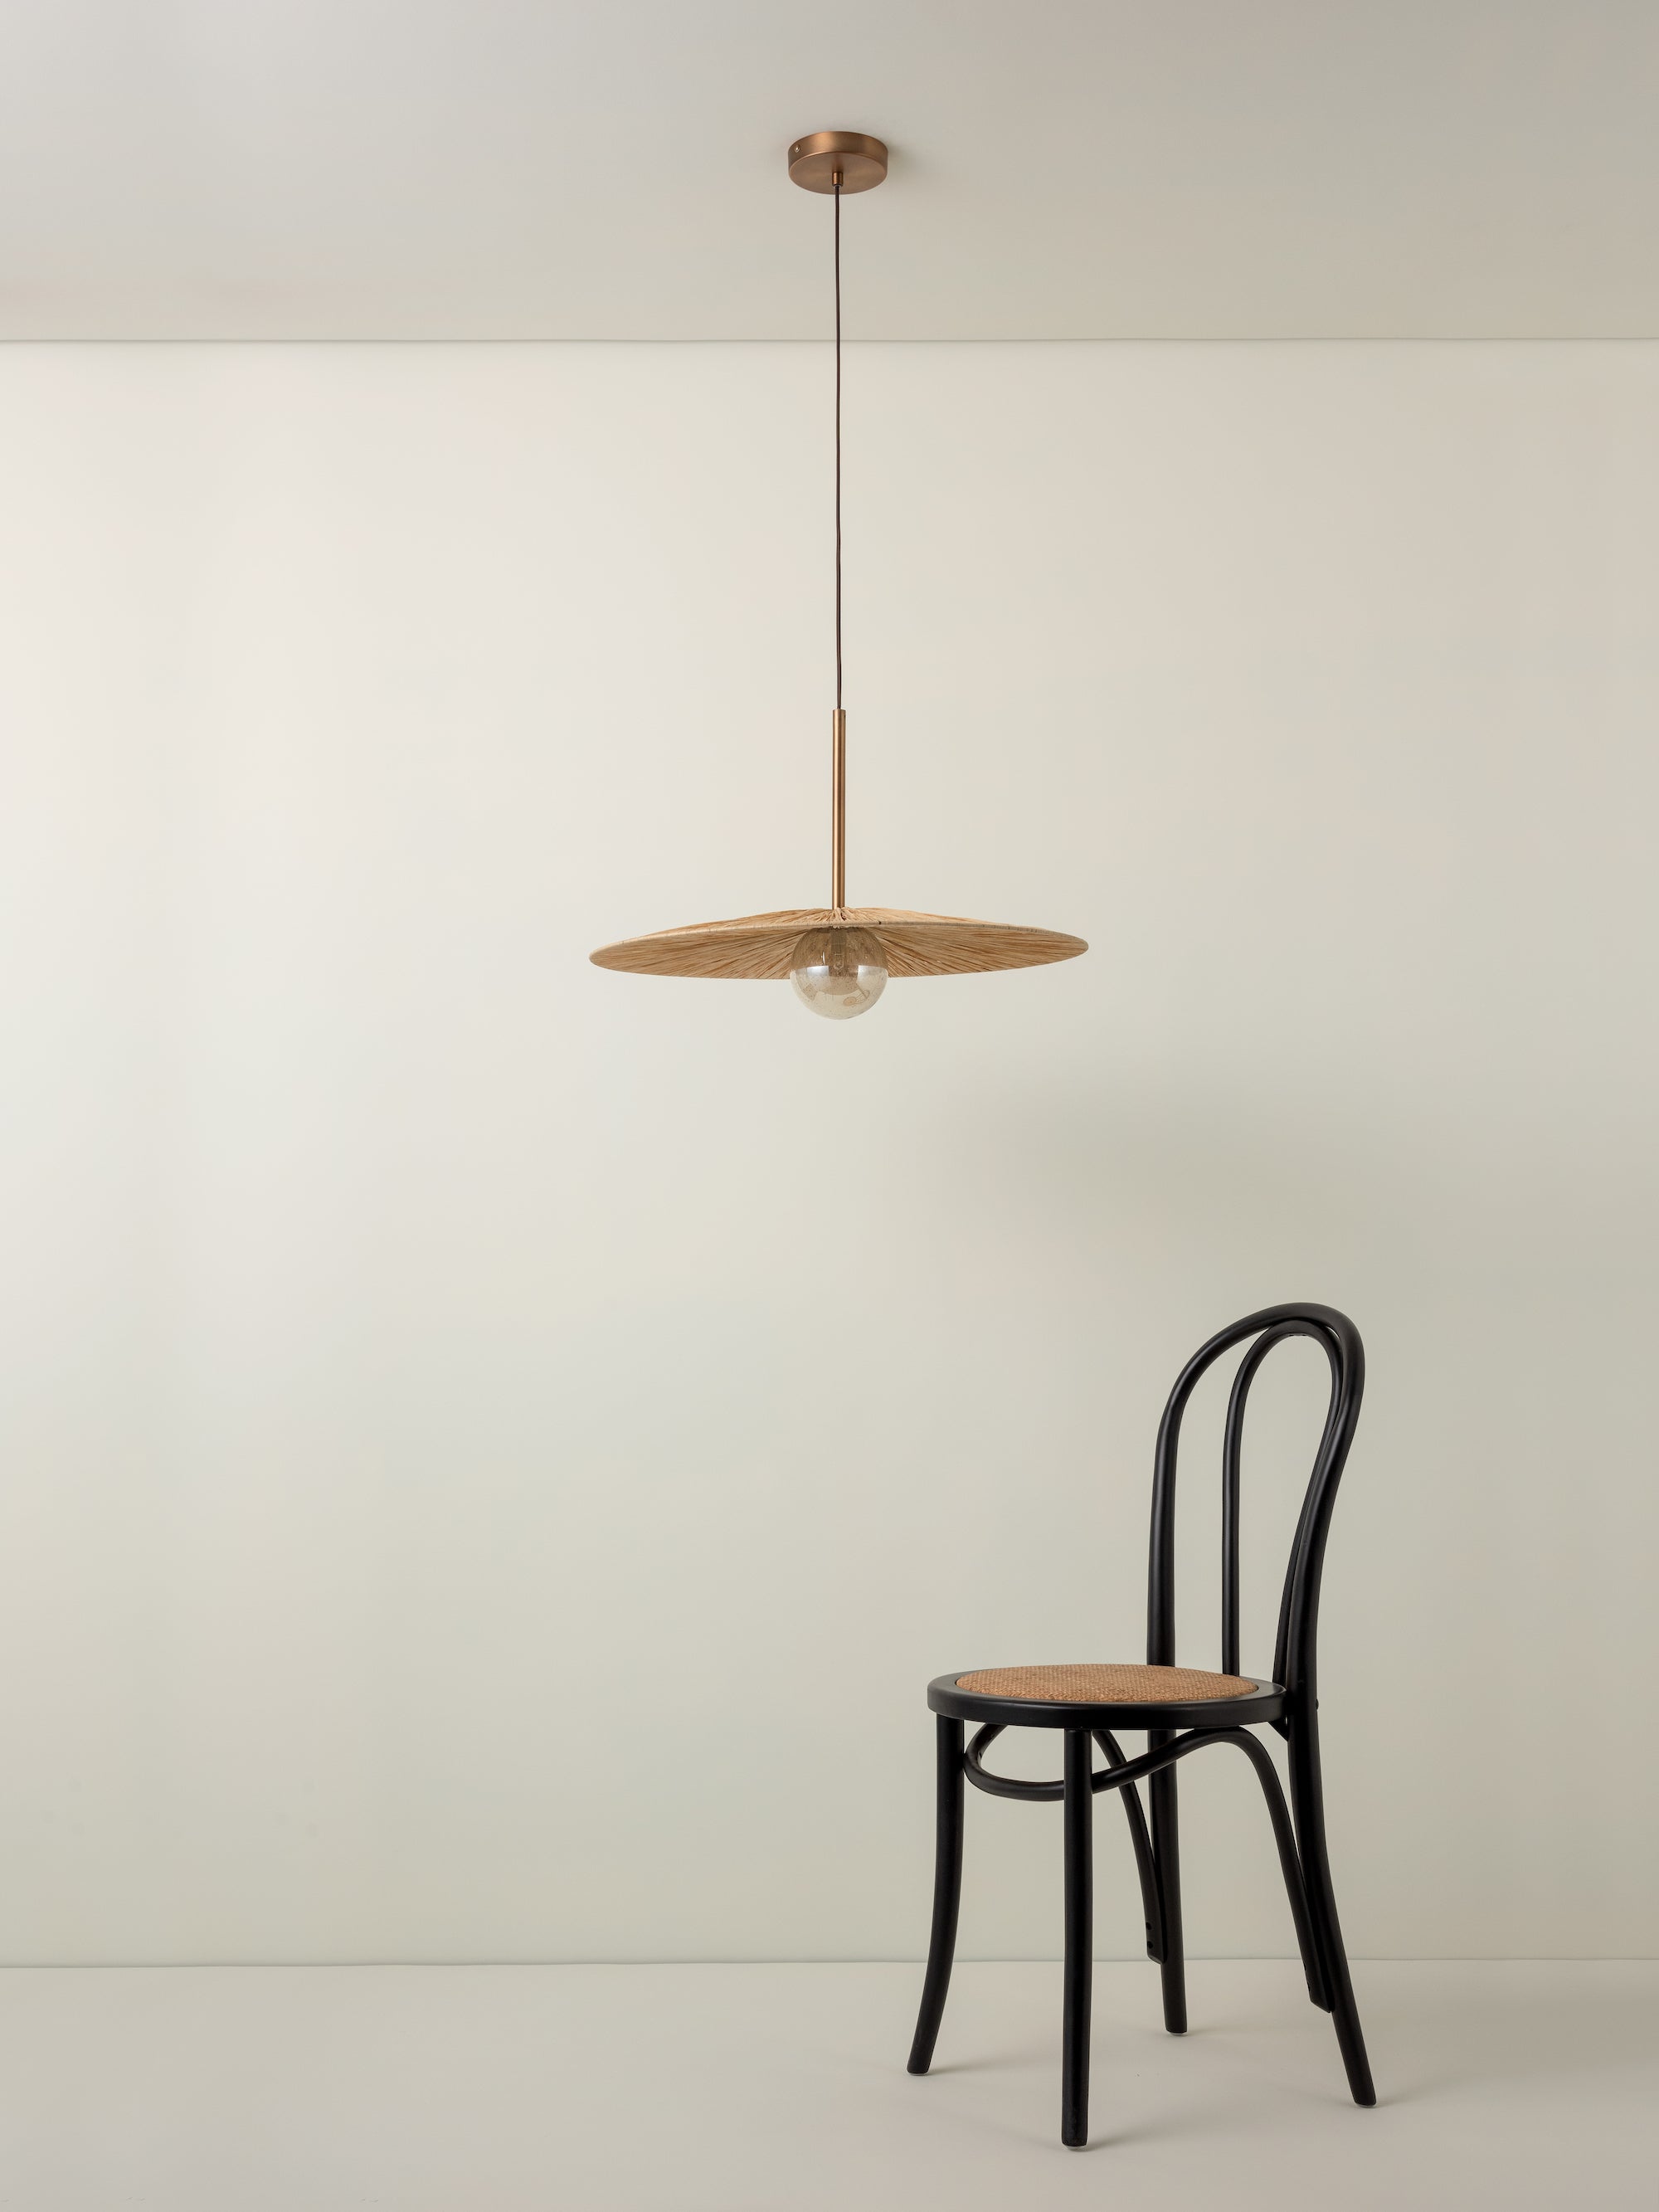 Ridotti - 1 light natural raffia and burnished brass pendant | Ceiling Light | Lights & Lamps | UK | Modern Affordable Designer Lighting